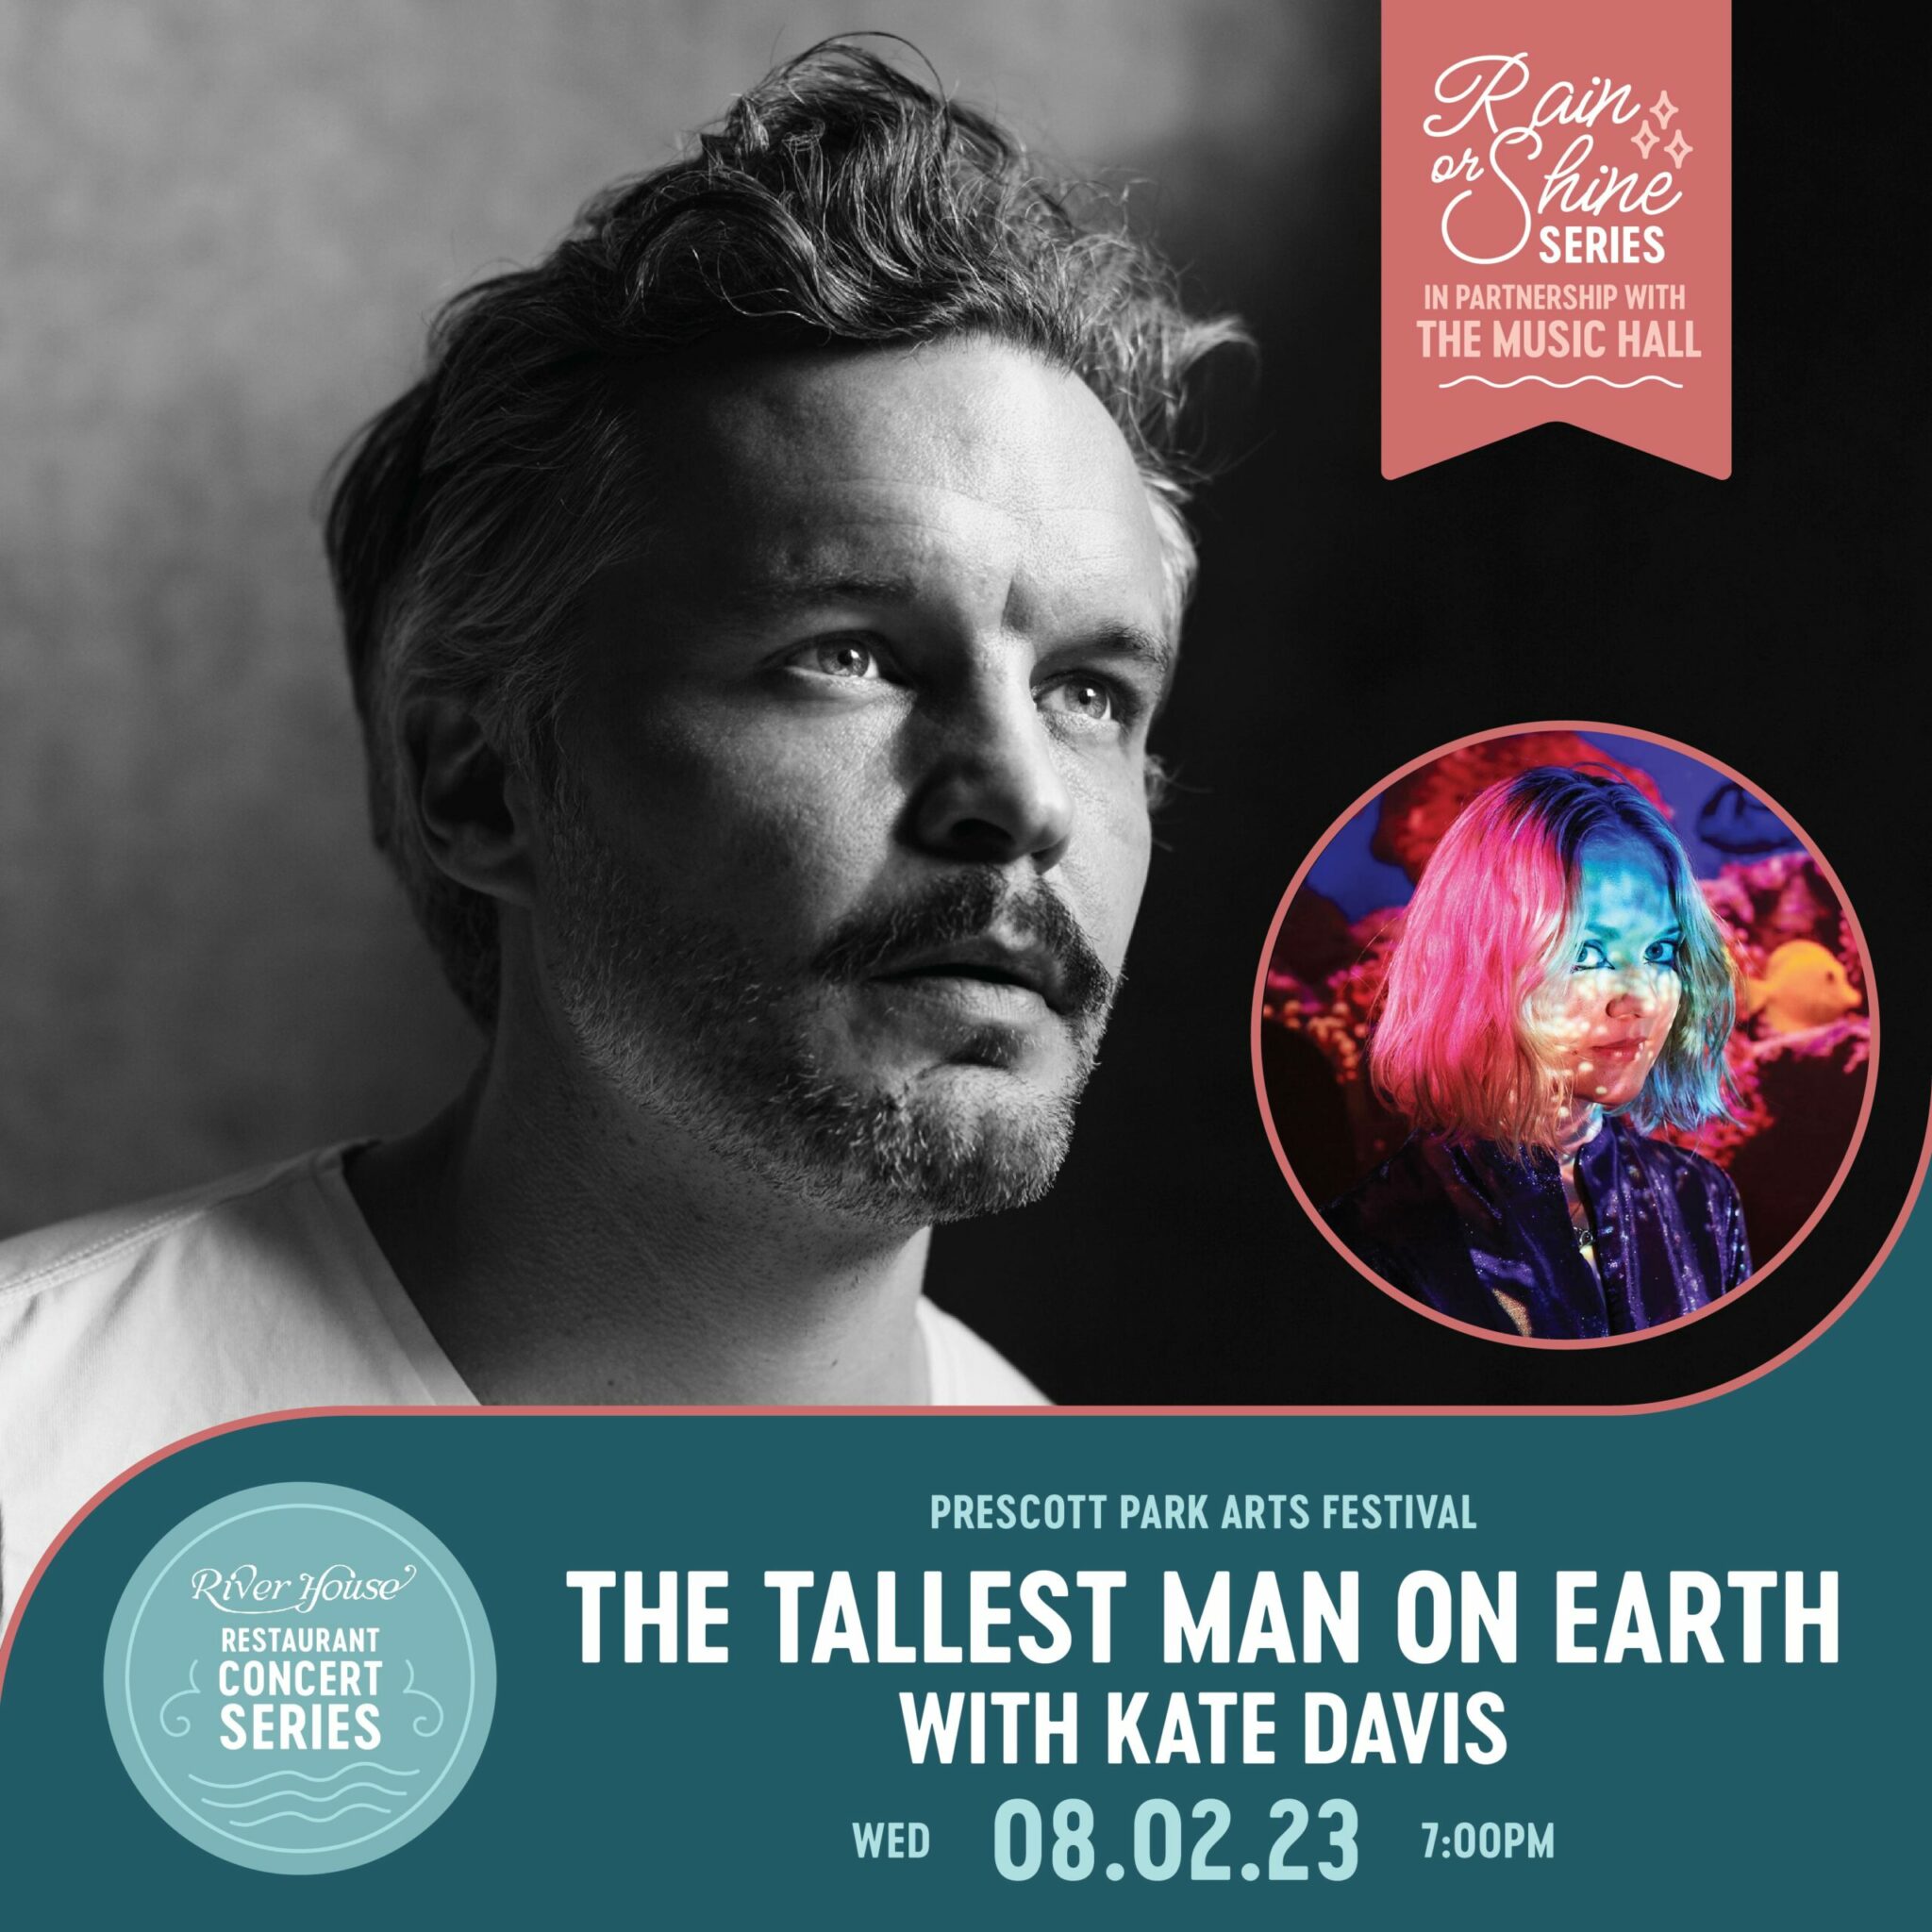 The Tallest Man on Earth with Kate Davis Prescott Park Arts Festival